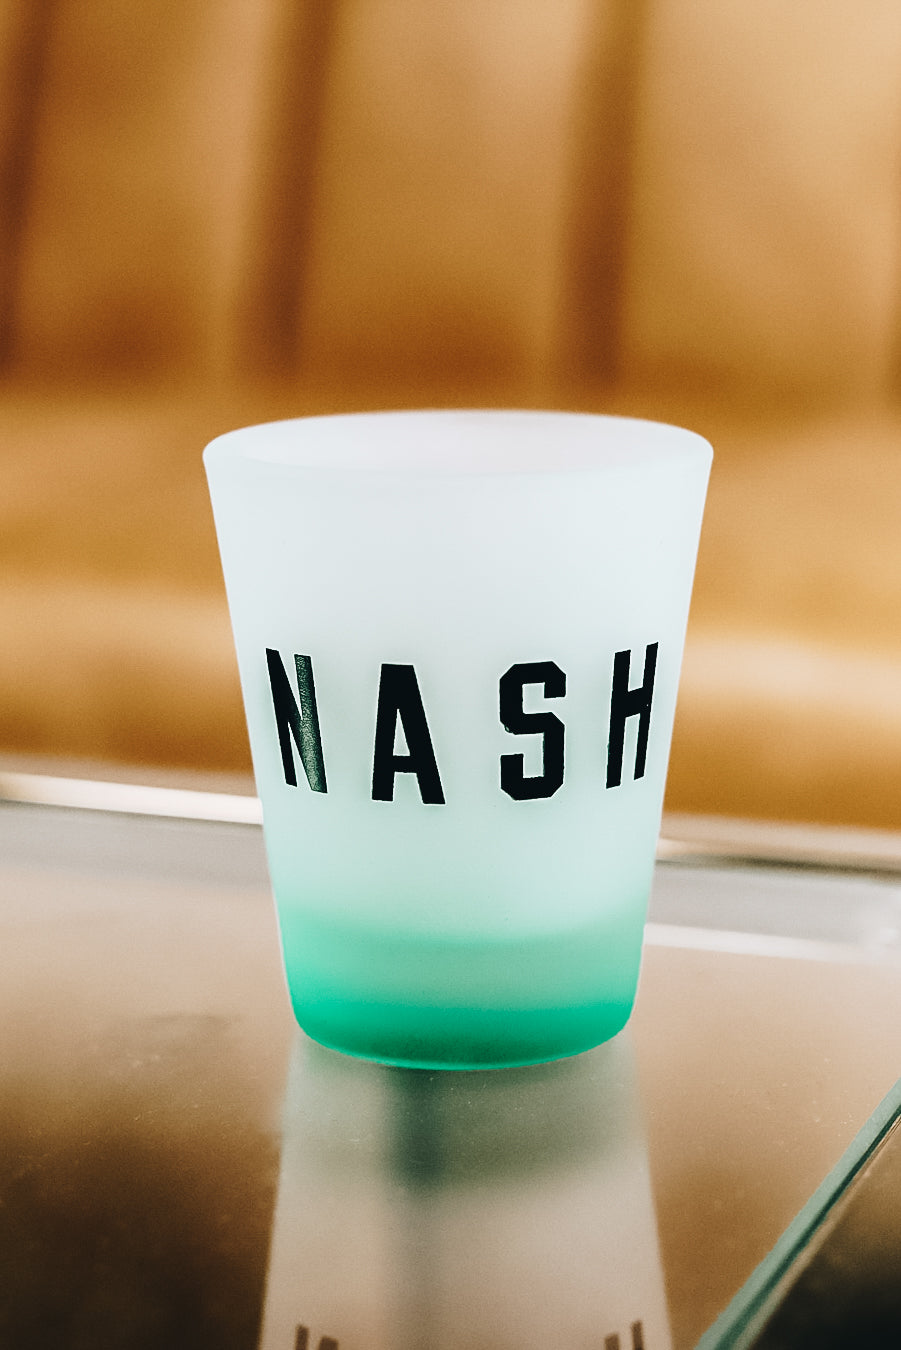 Yeti 25oz Straw Mug [White] – The Nash Collection